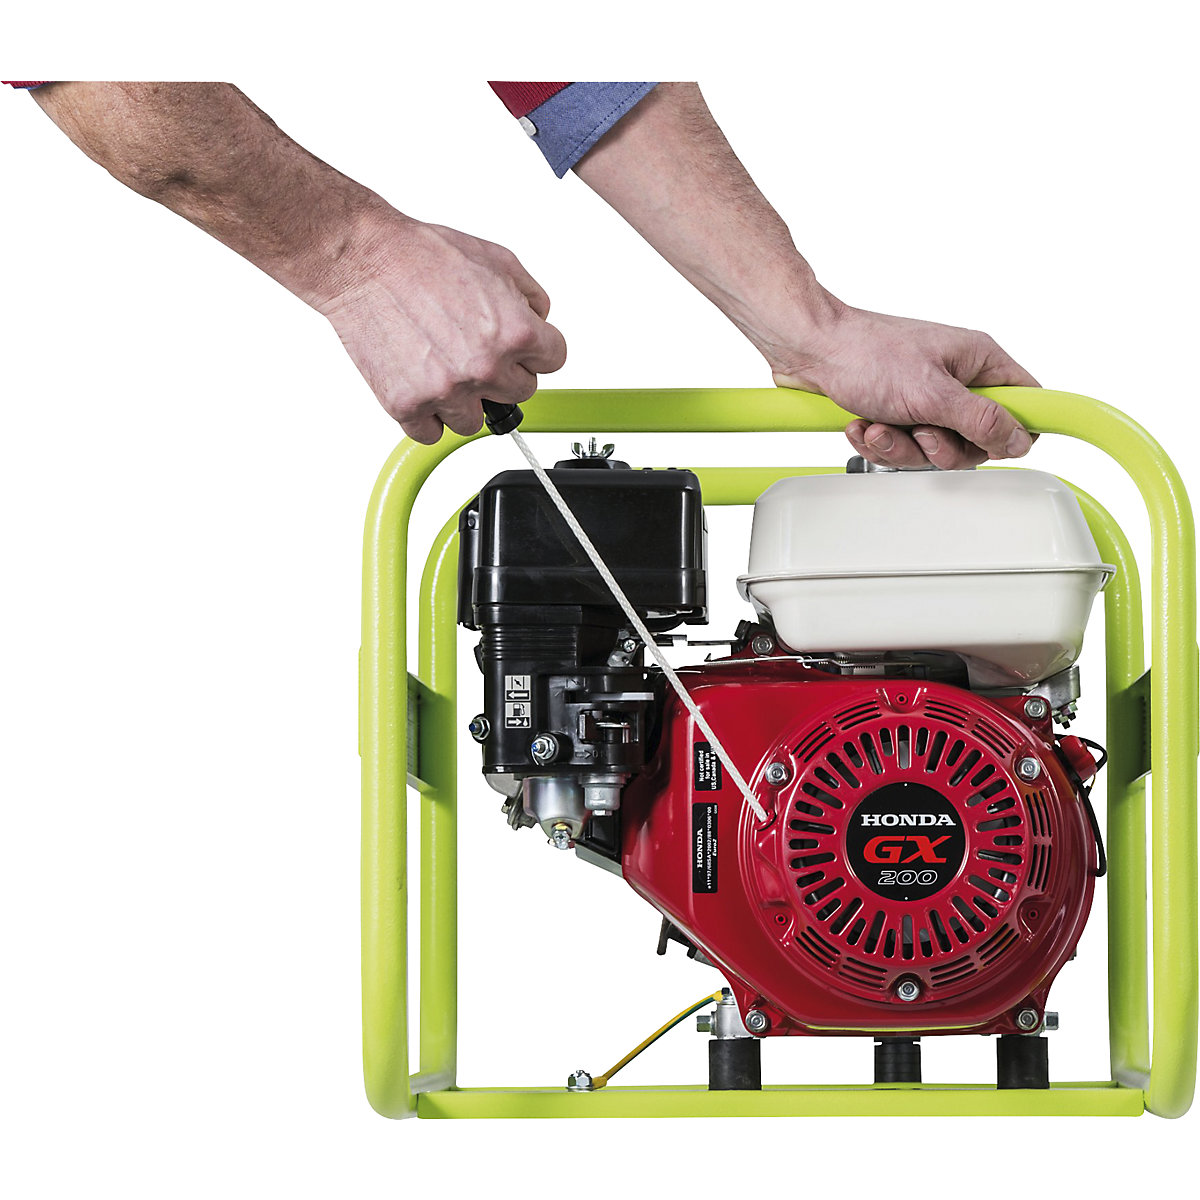 E series power generator – petrol, 230 V – Pramac (Product illustration 2)-1